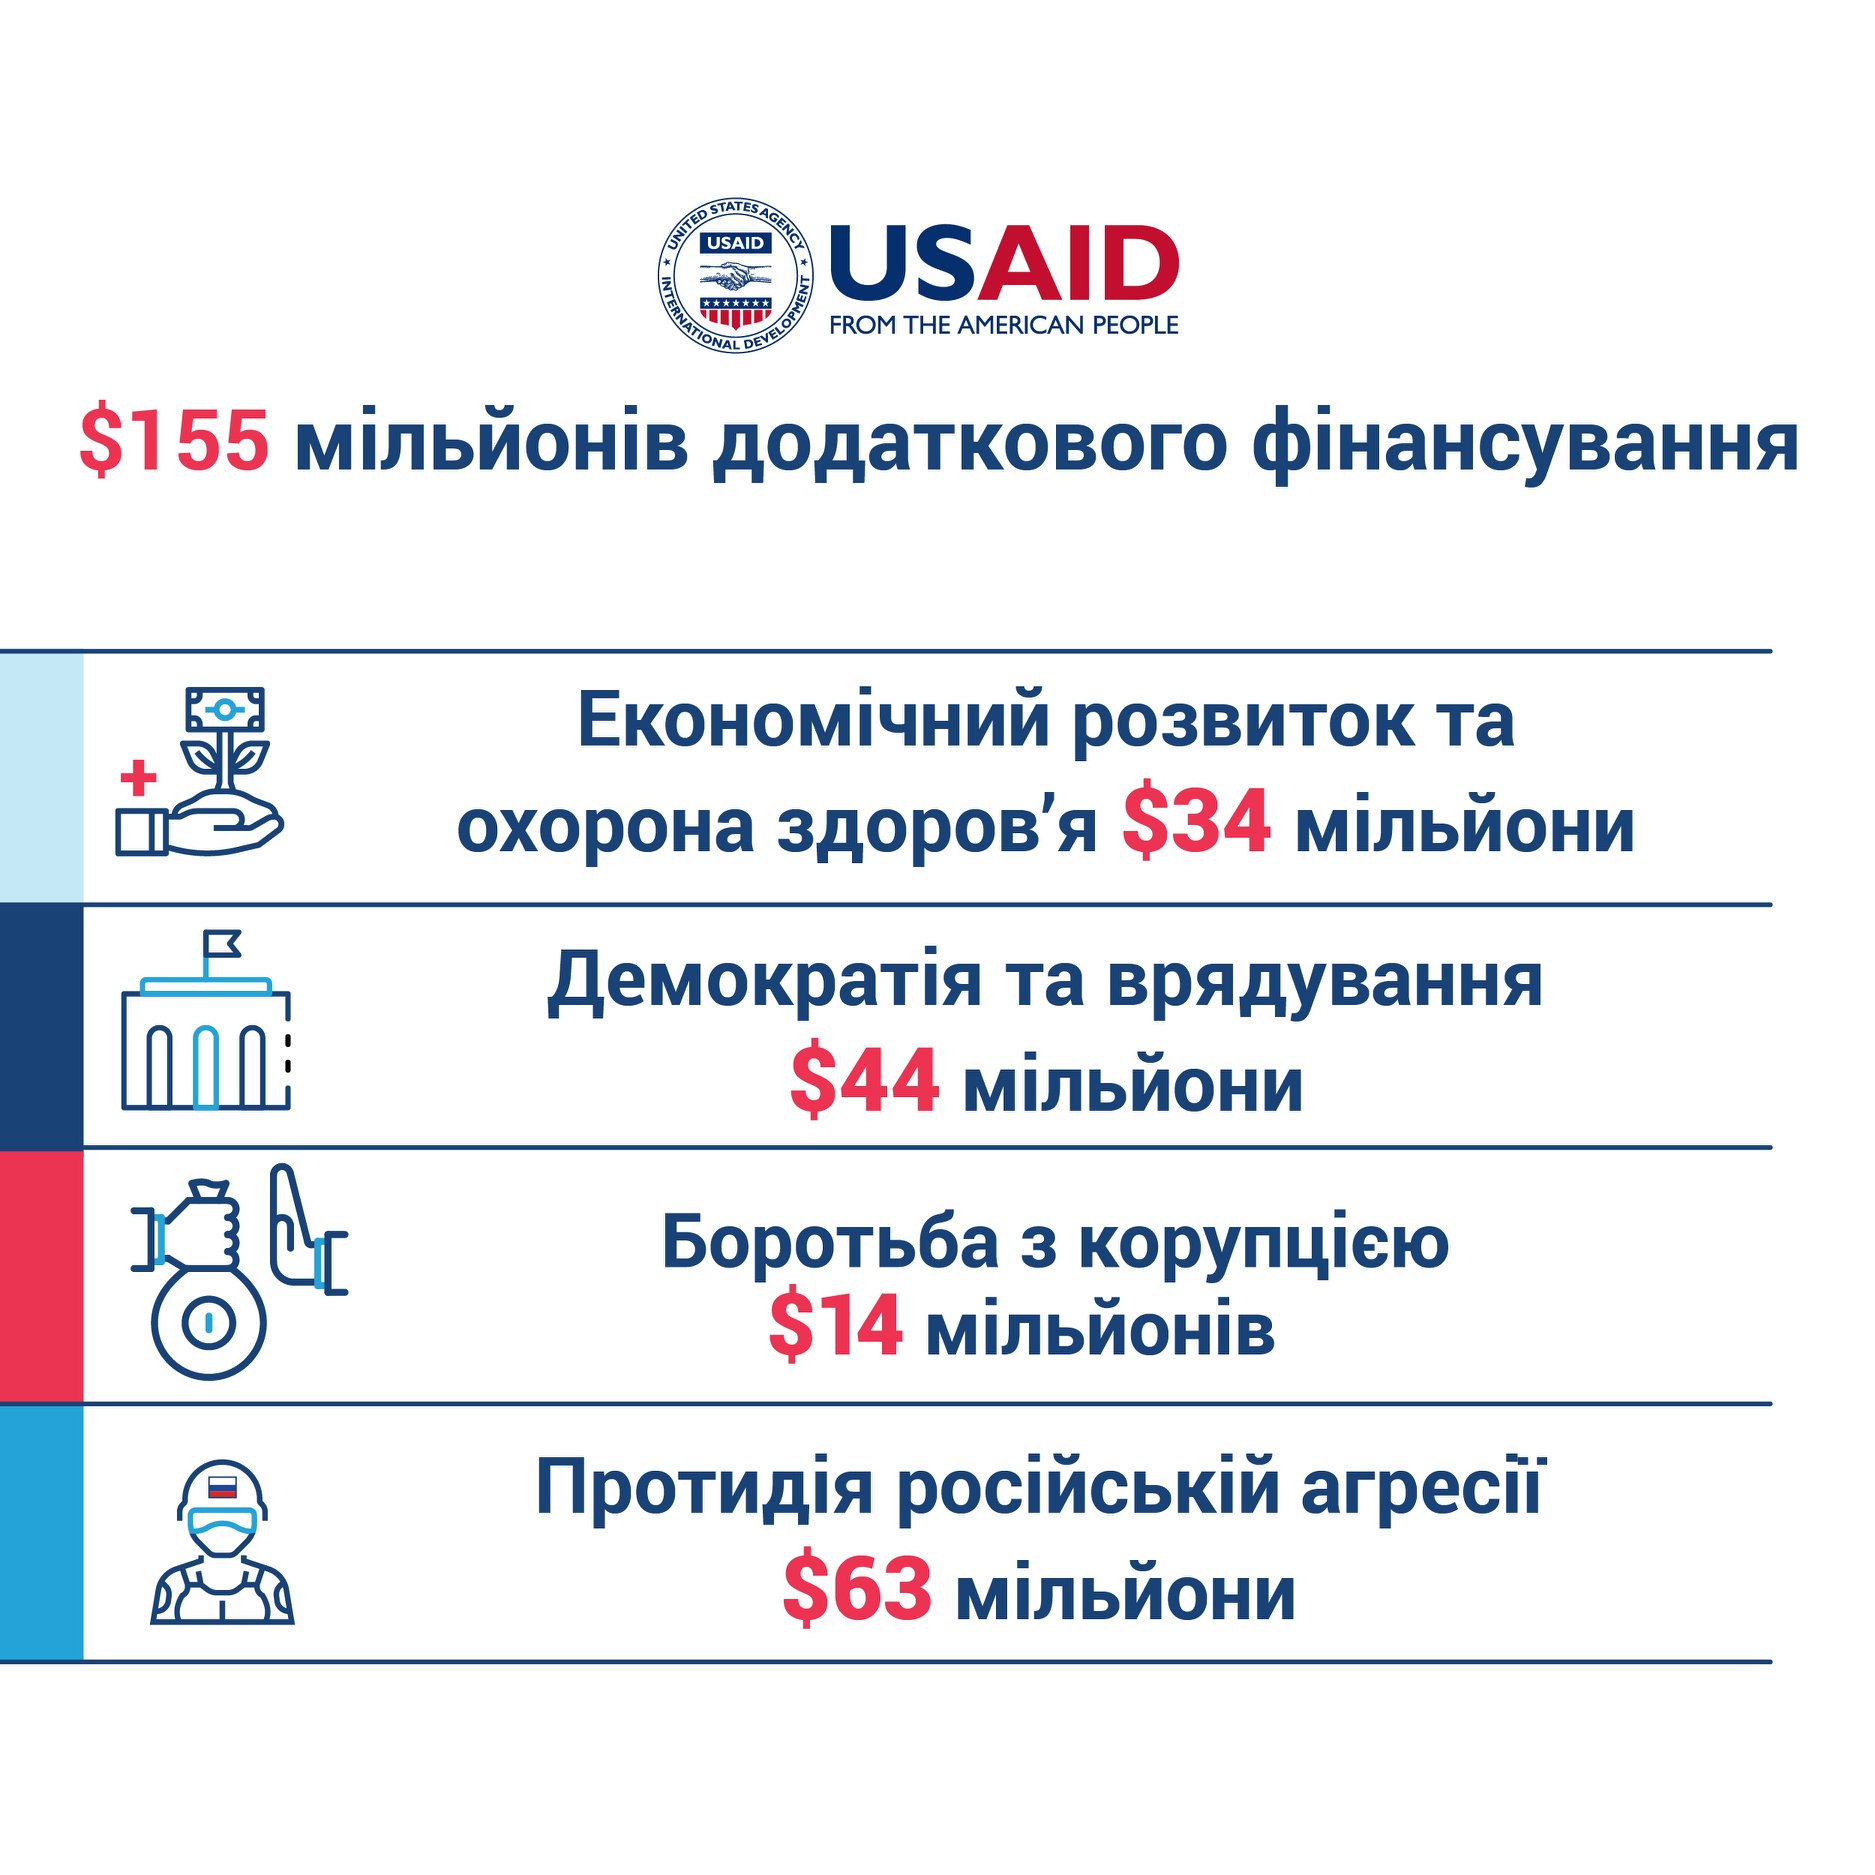 USAIDcredit